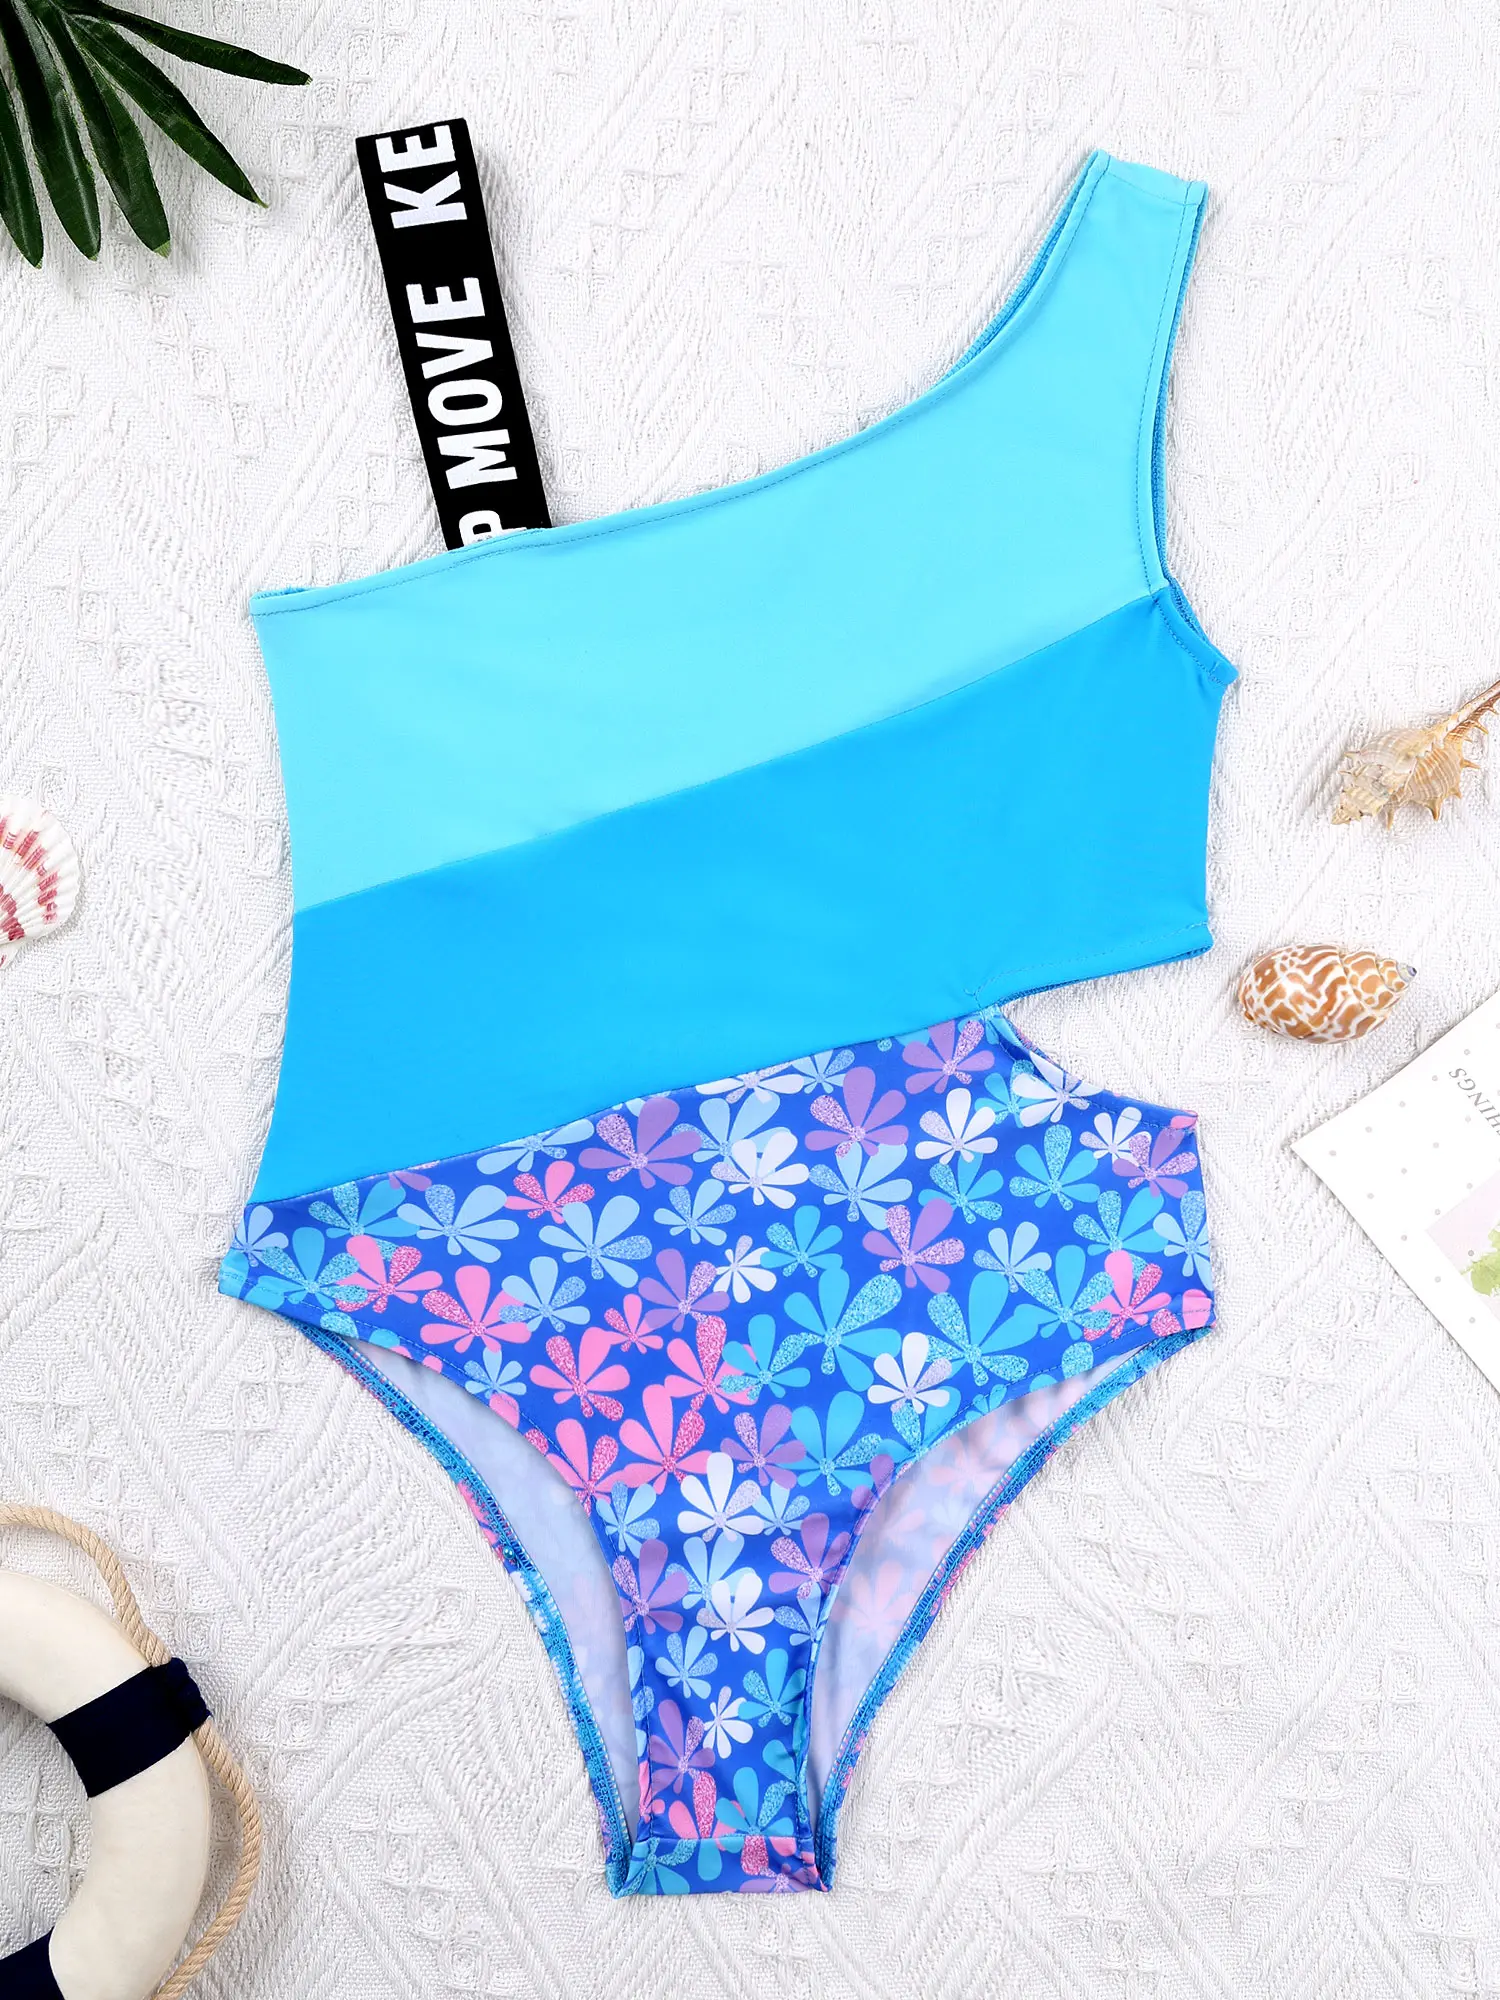 MSemis Kids Girls Swimsuits Swimwear One Piece Swimming Costume Beachwear Bathing Suit 